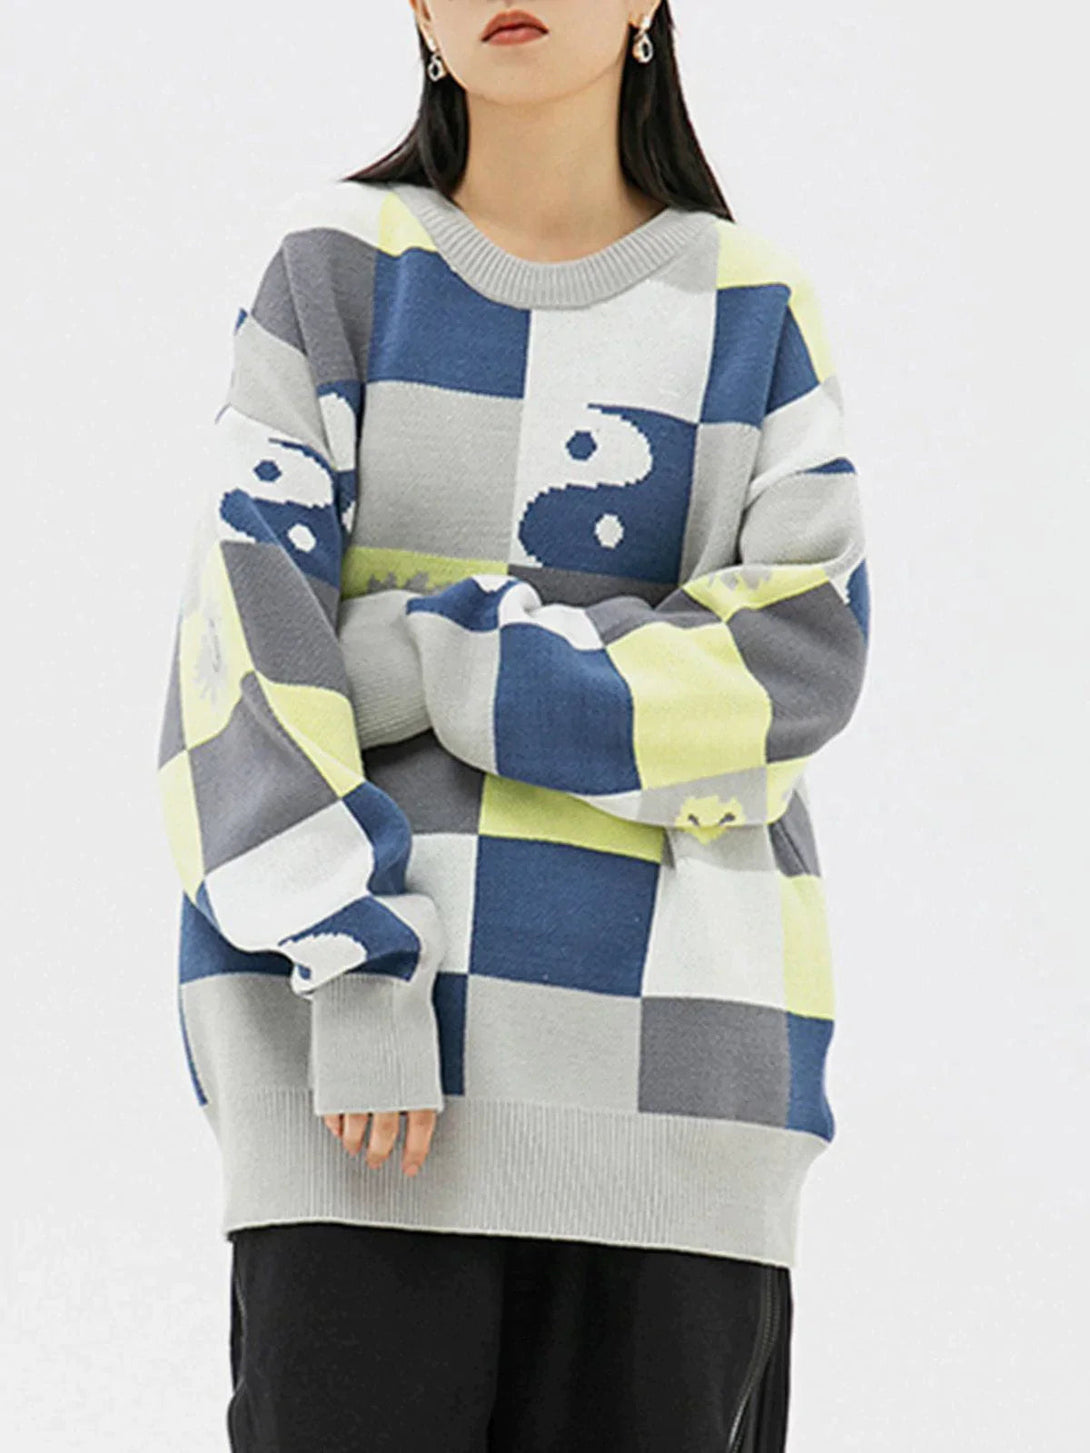 Majesda® - Vintage Gossip Print Sweater outfit ideas streetwear fashion